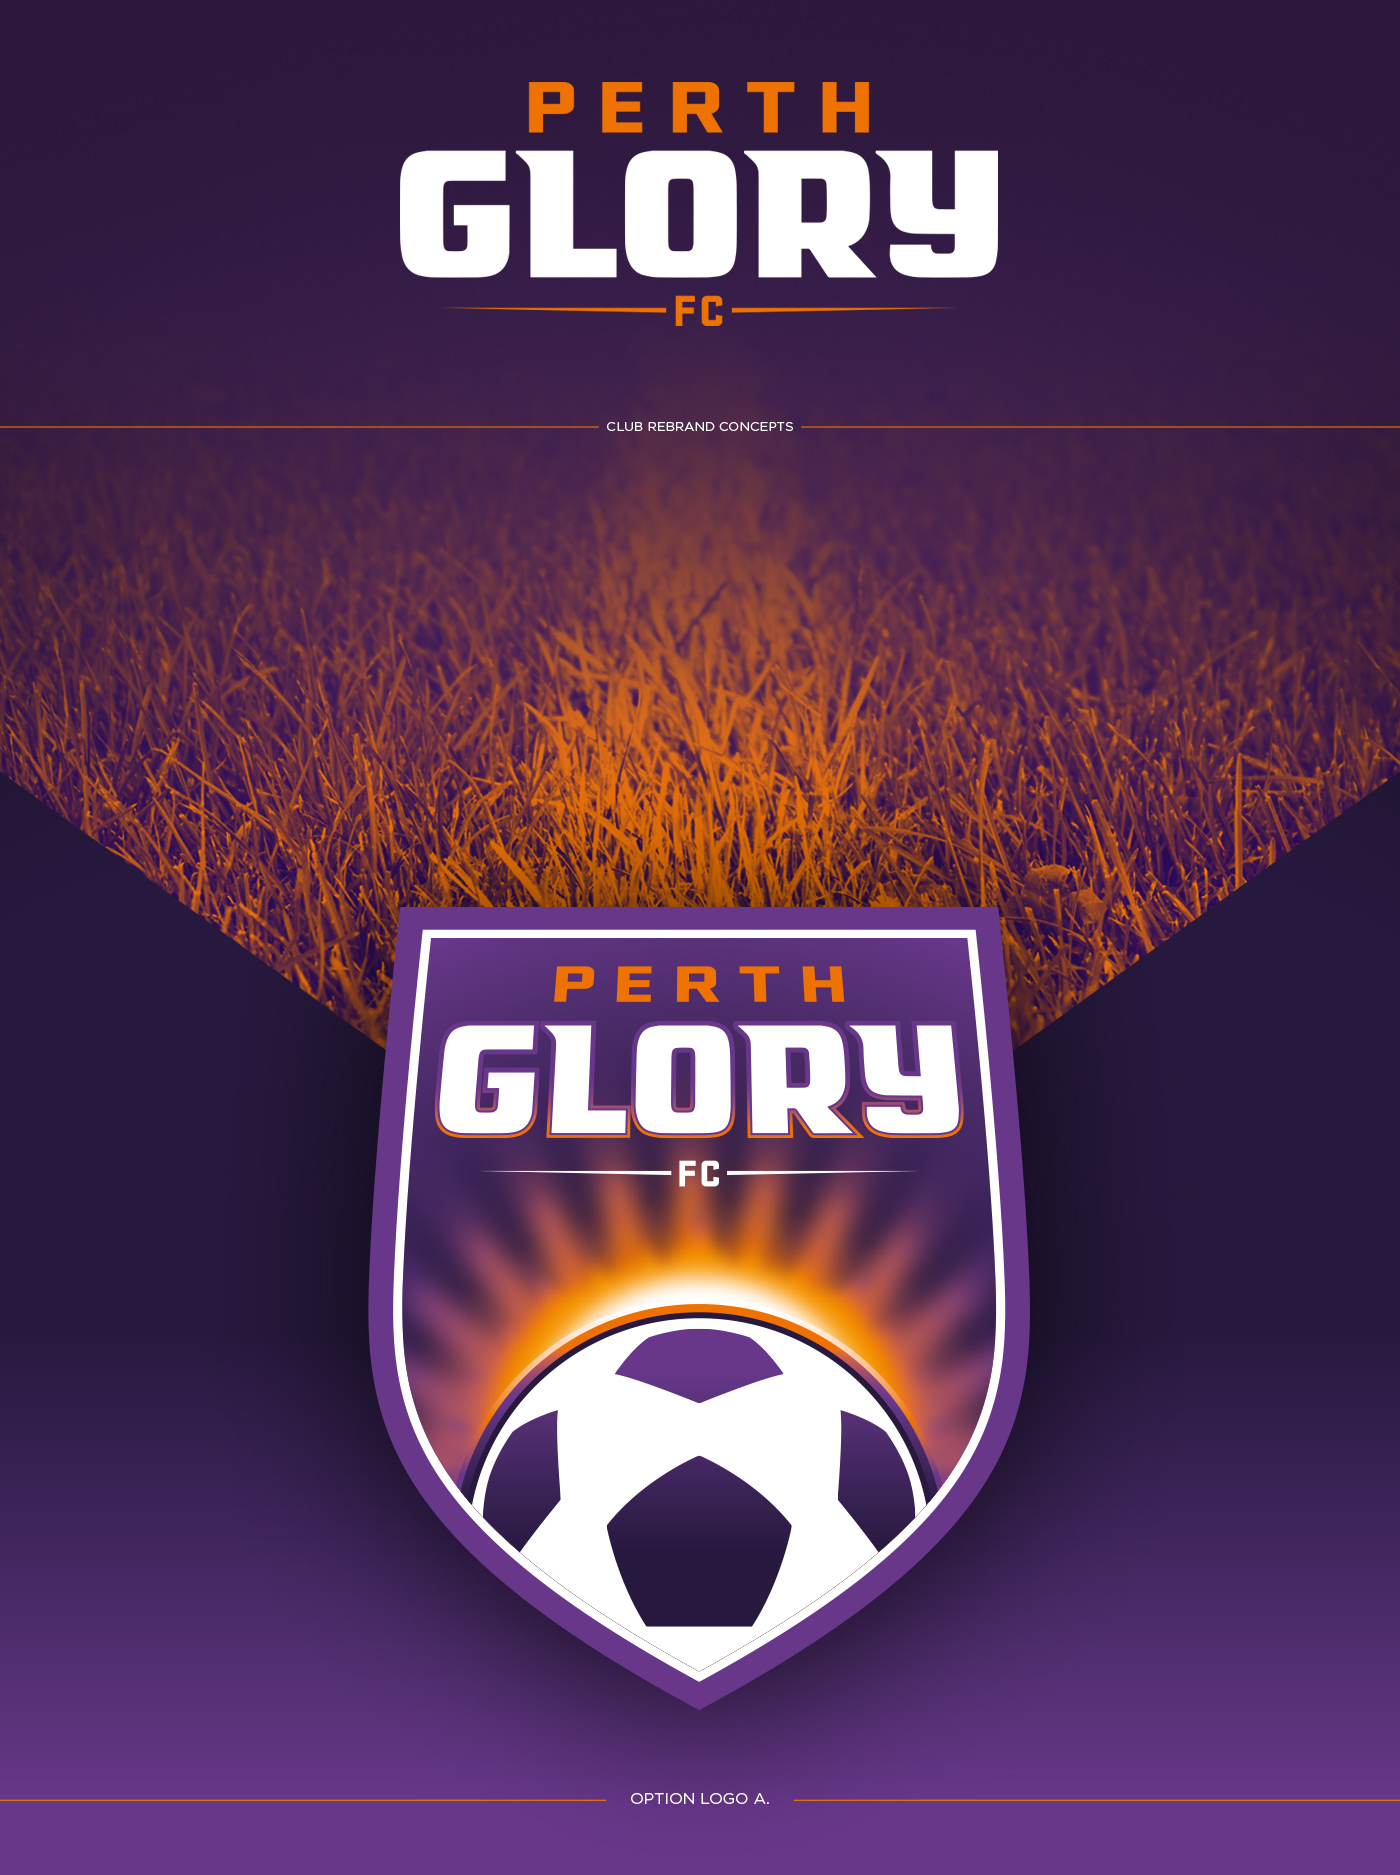 perth glory soccer logo concept purple orange a-league